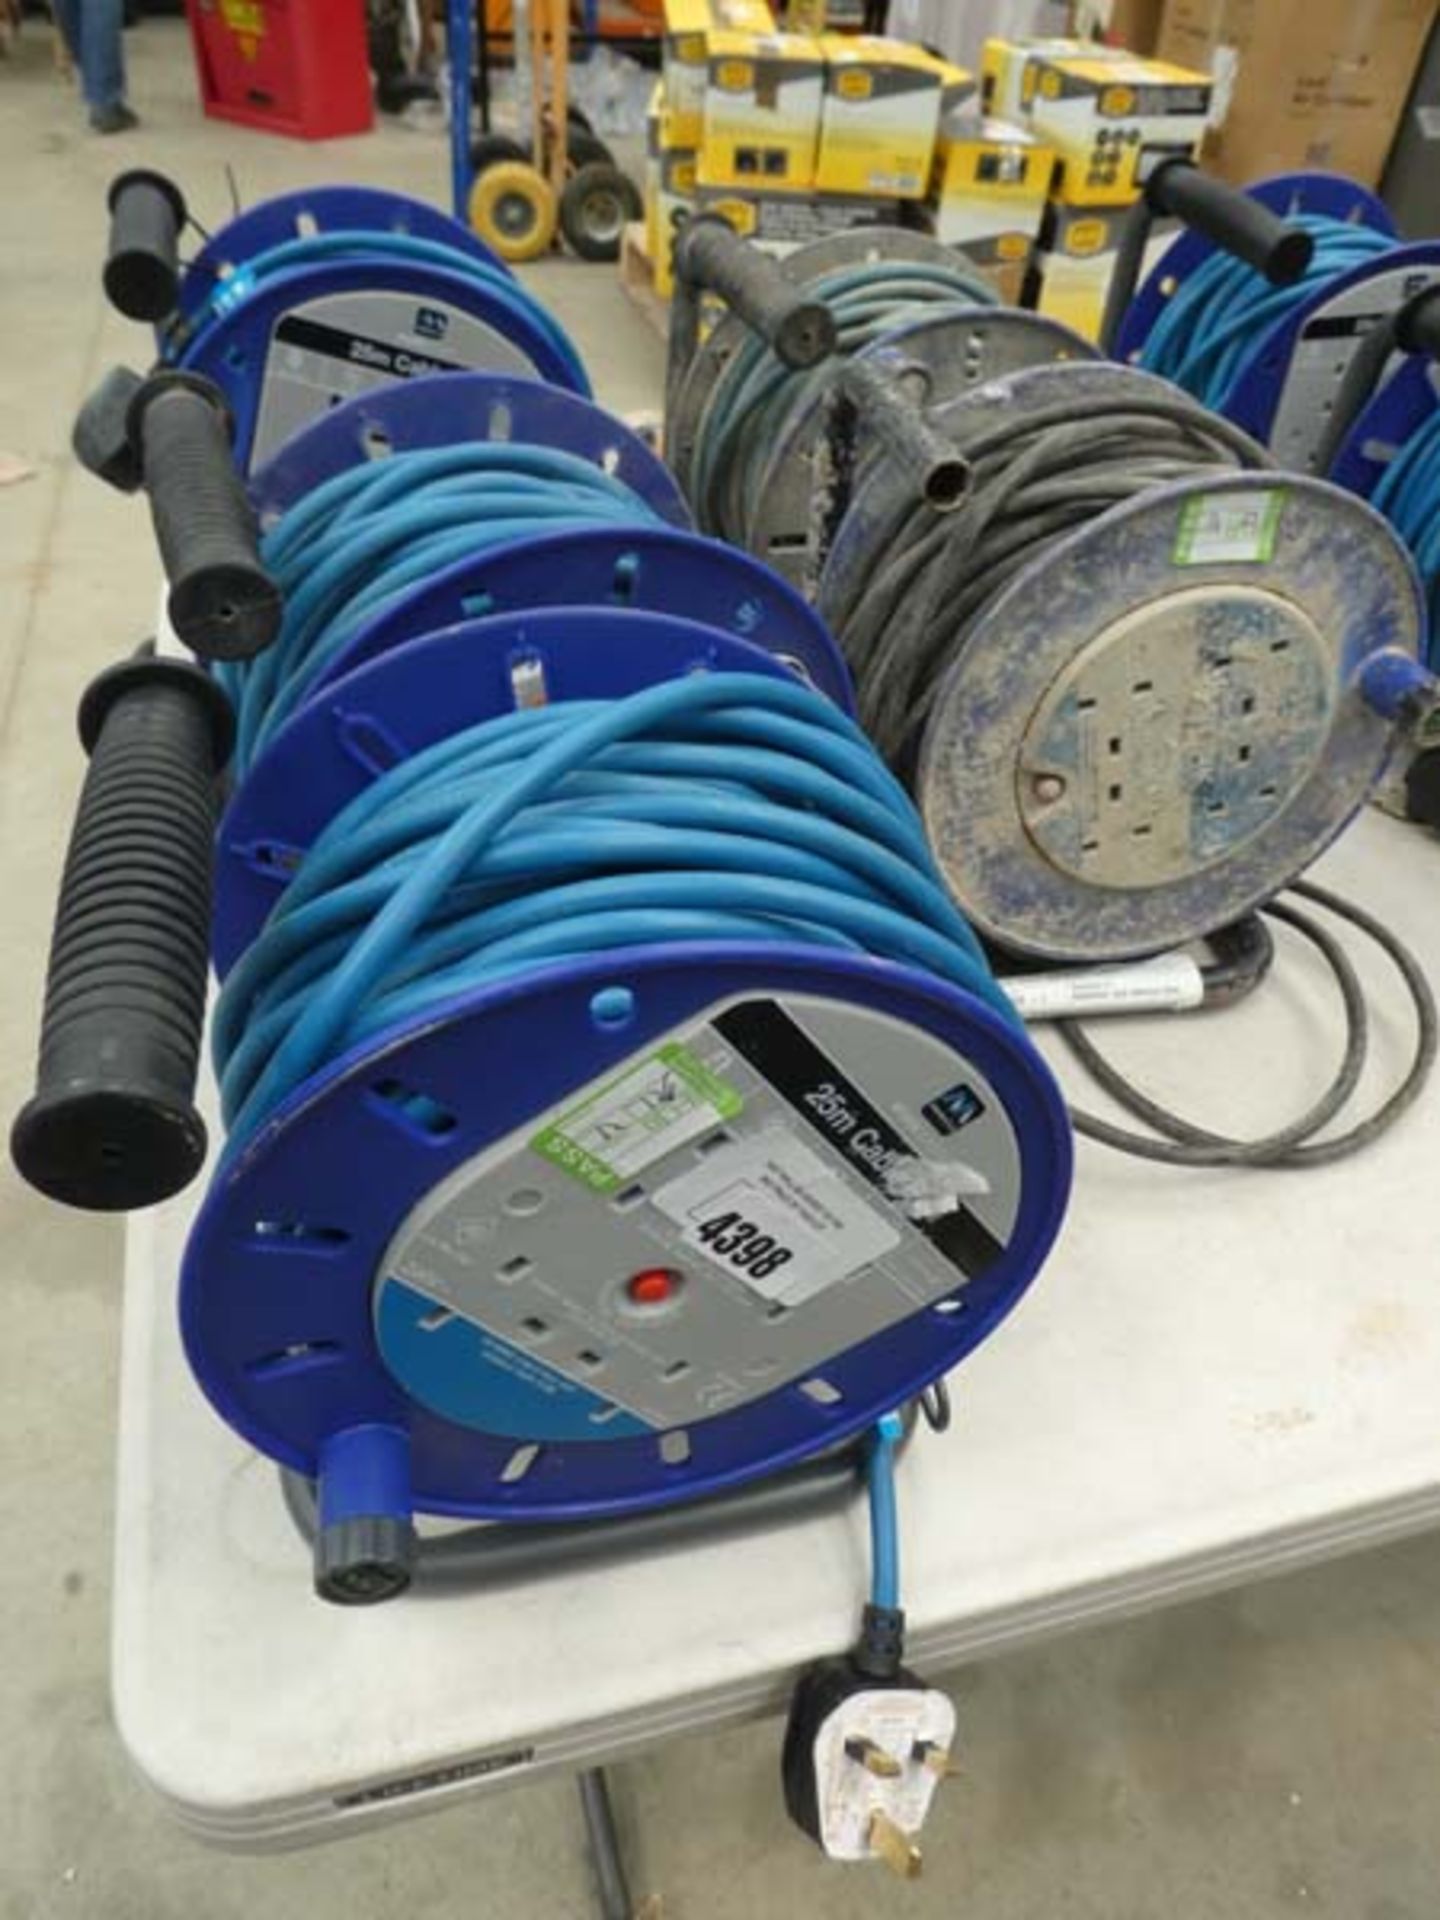 5 blue extension cables